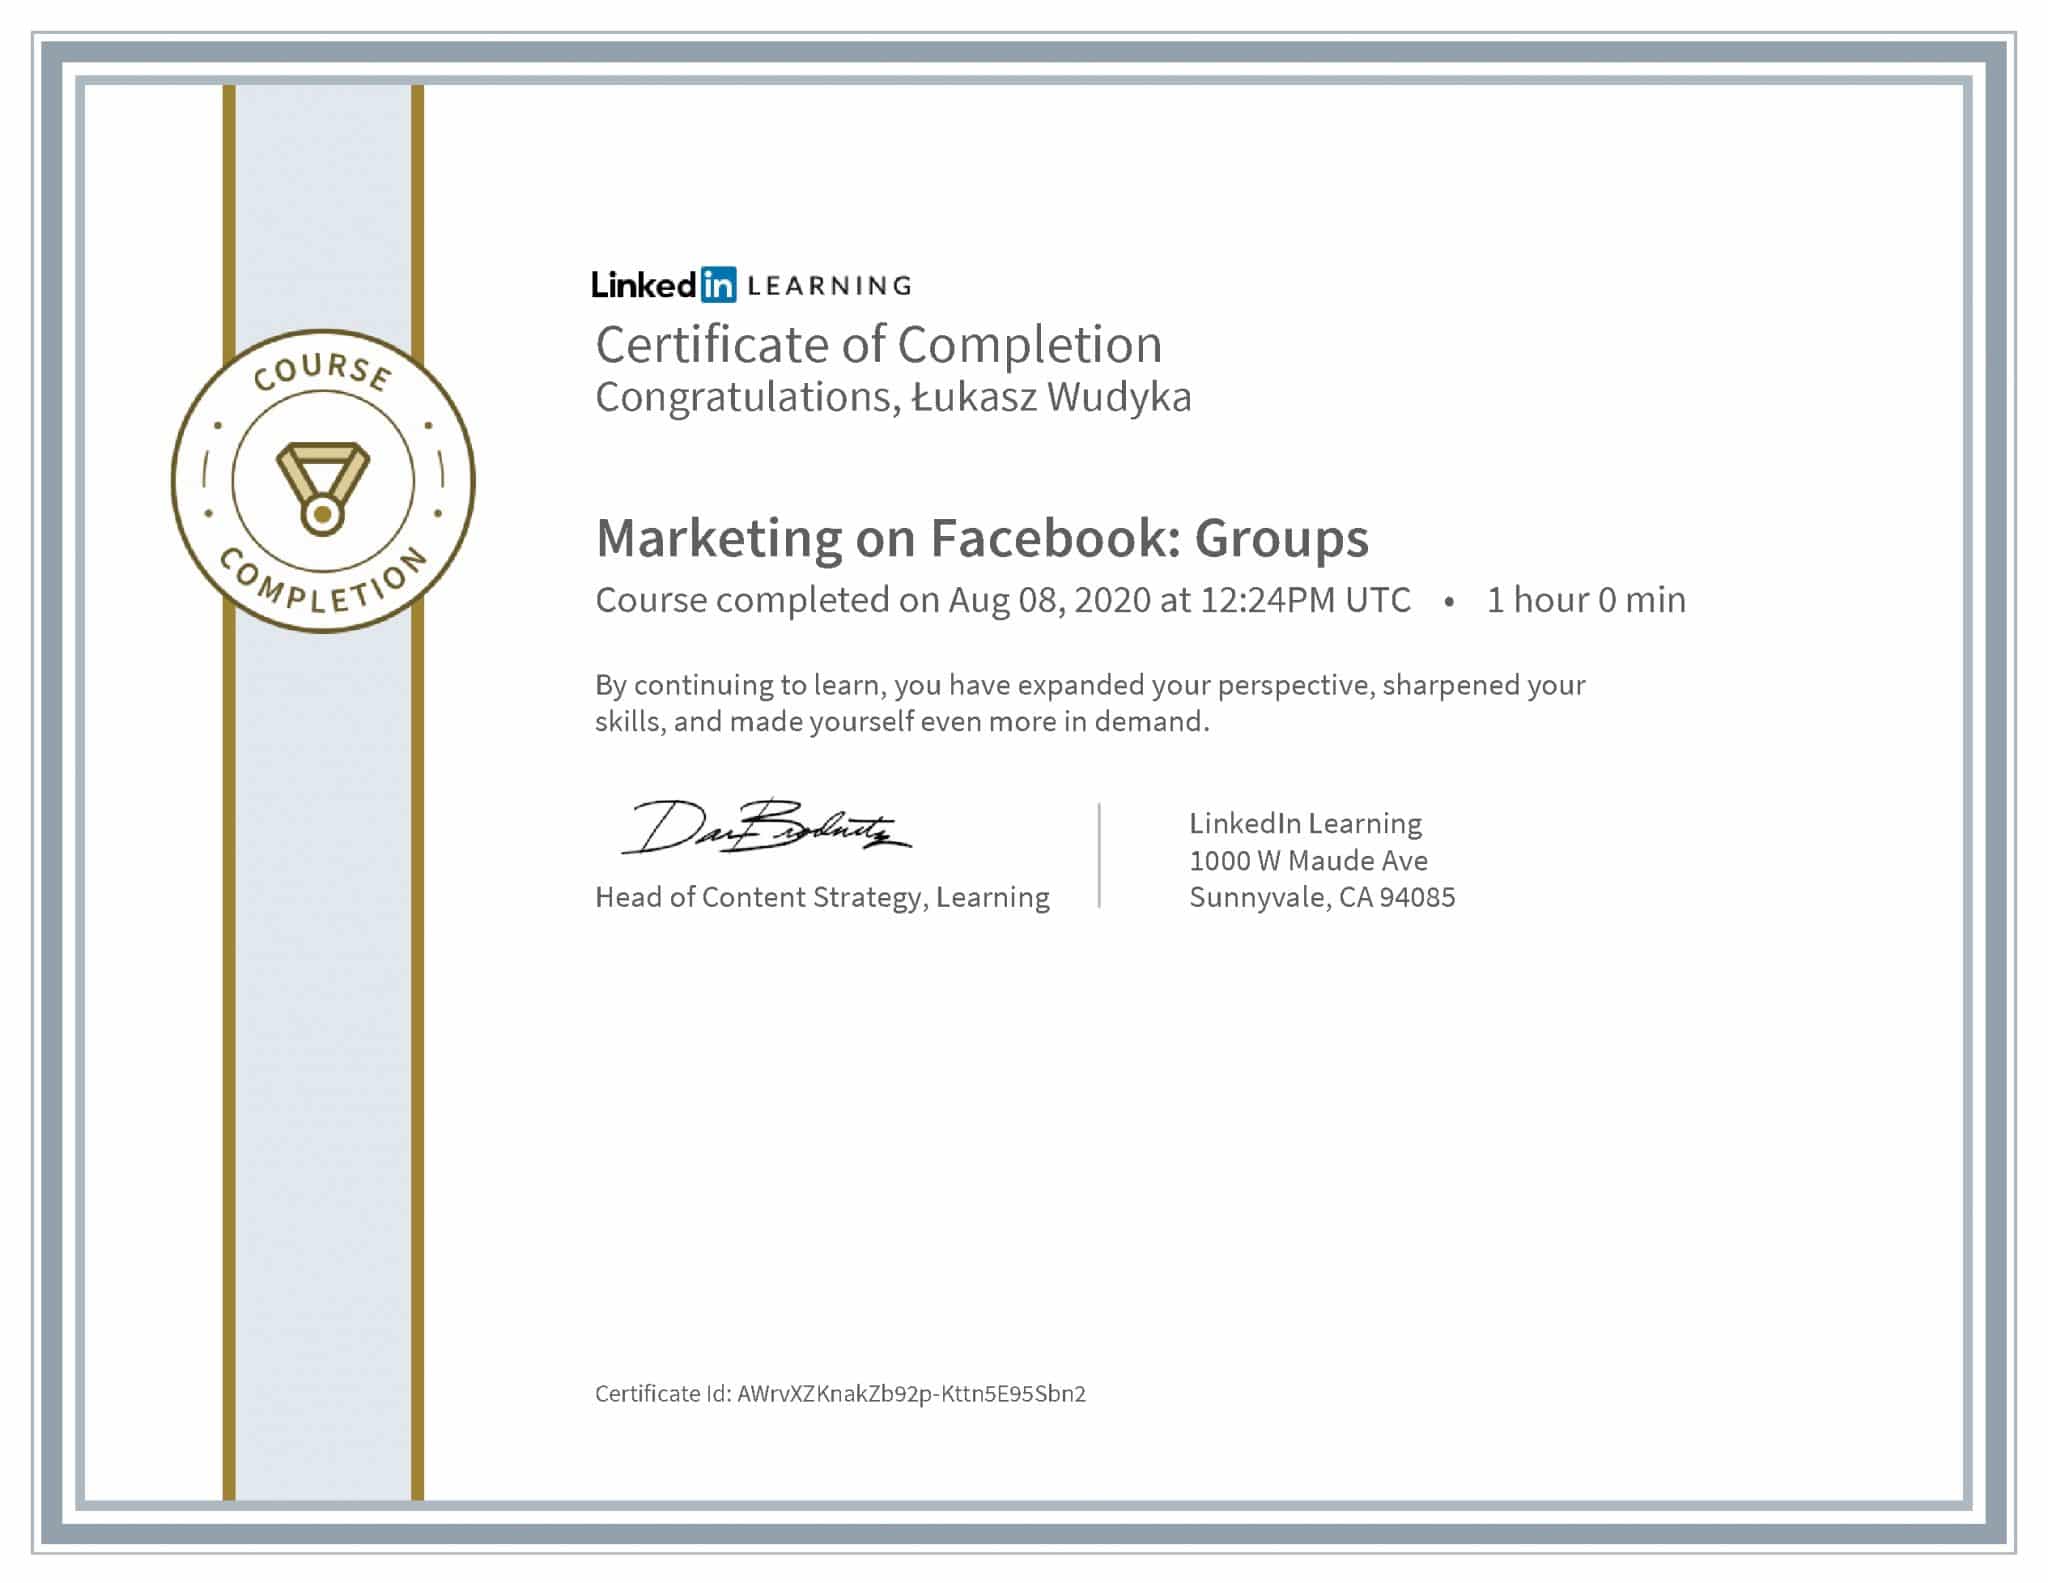 Łukasz Wudyka certyfikat LinkedIn Marketing on Facebook: Groups